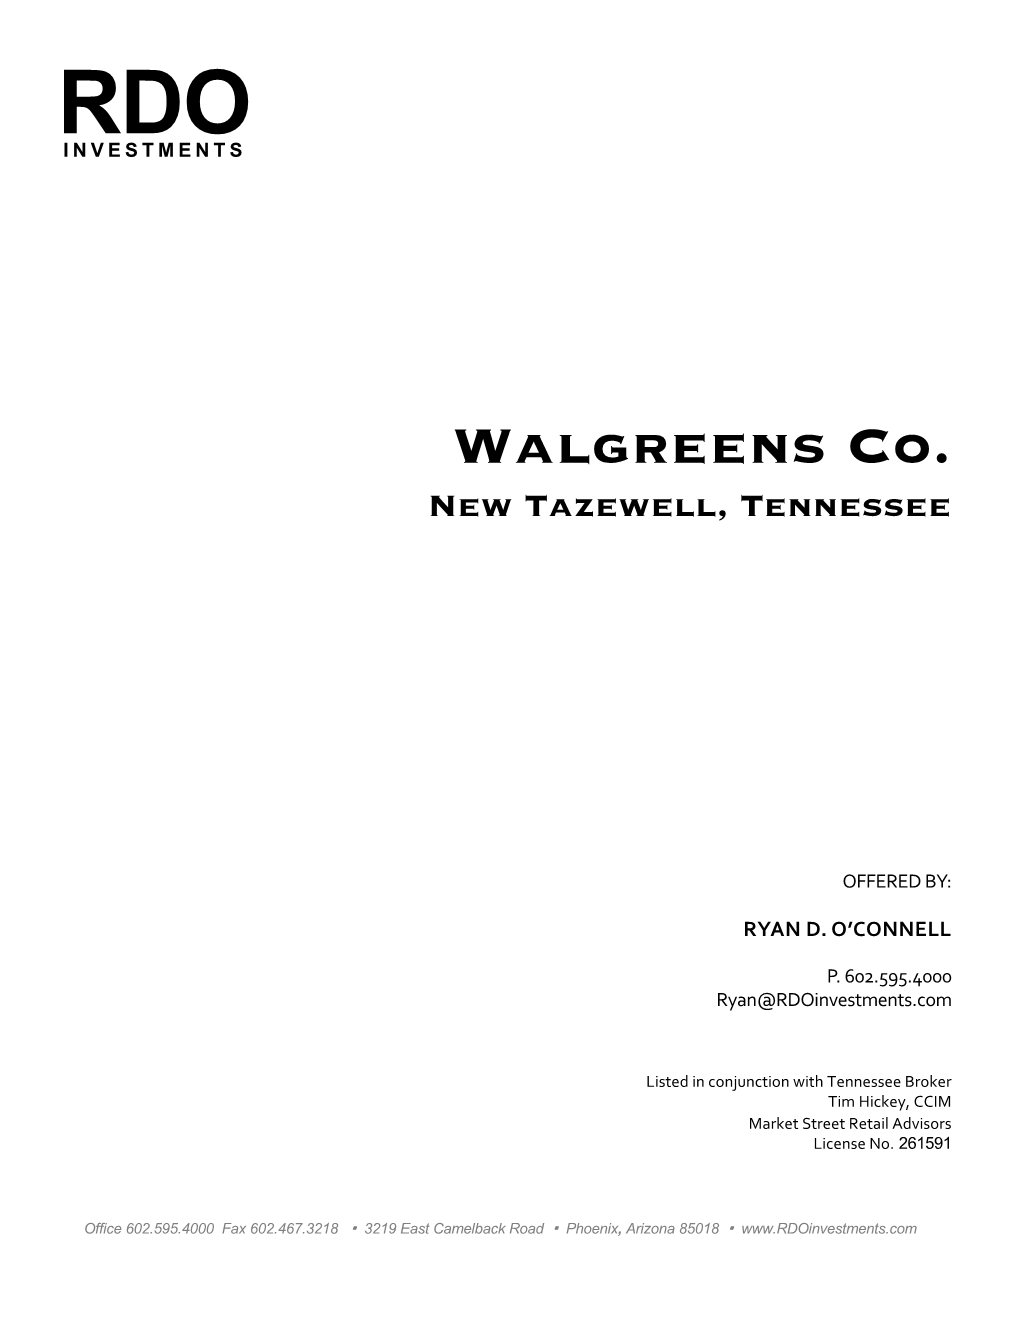 Walgreens Co